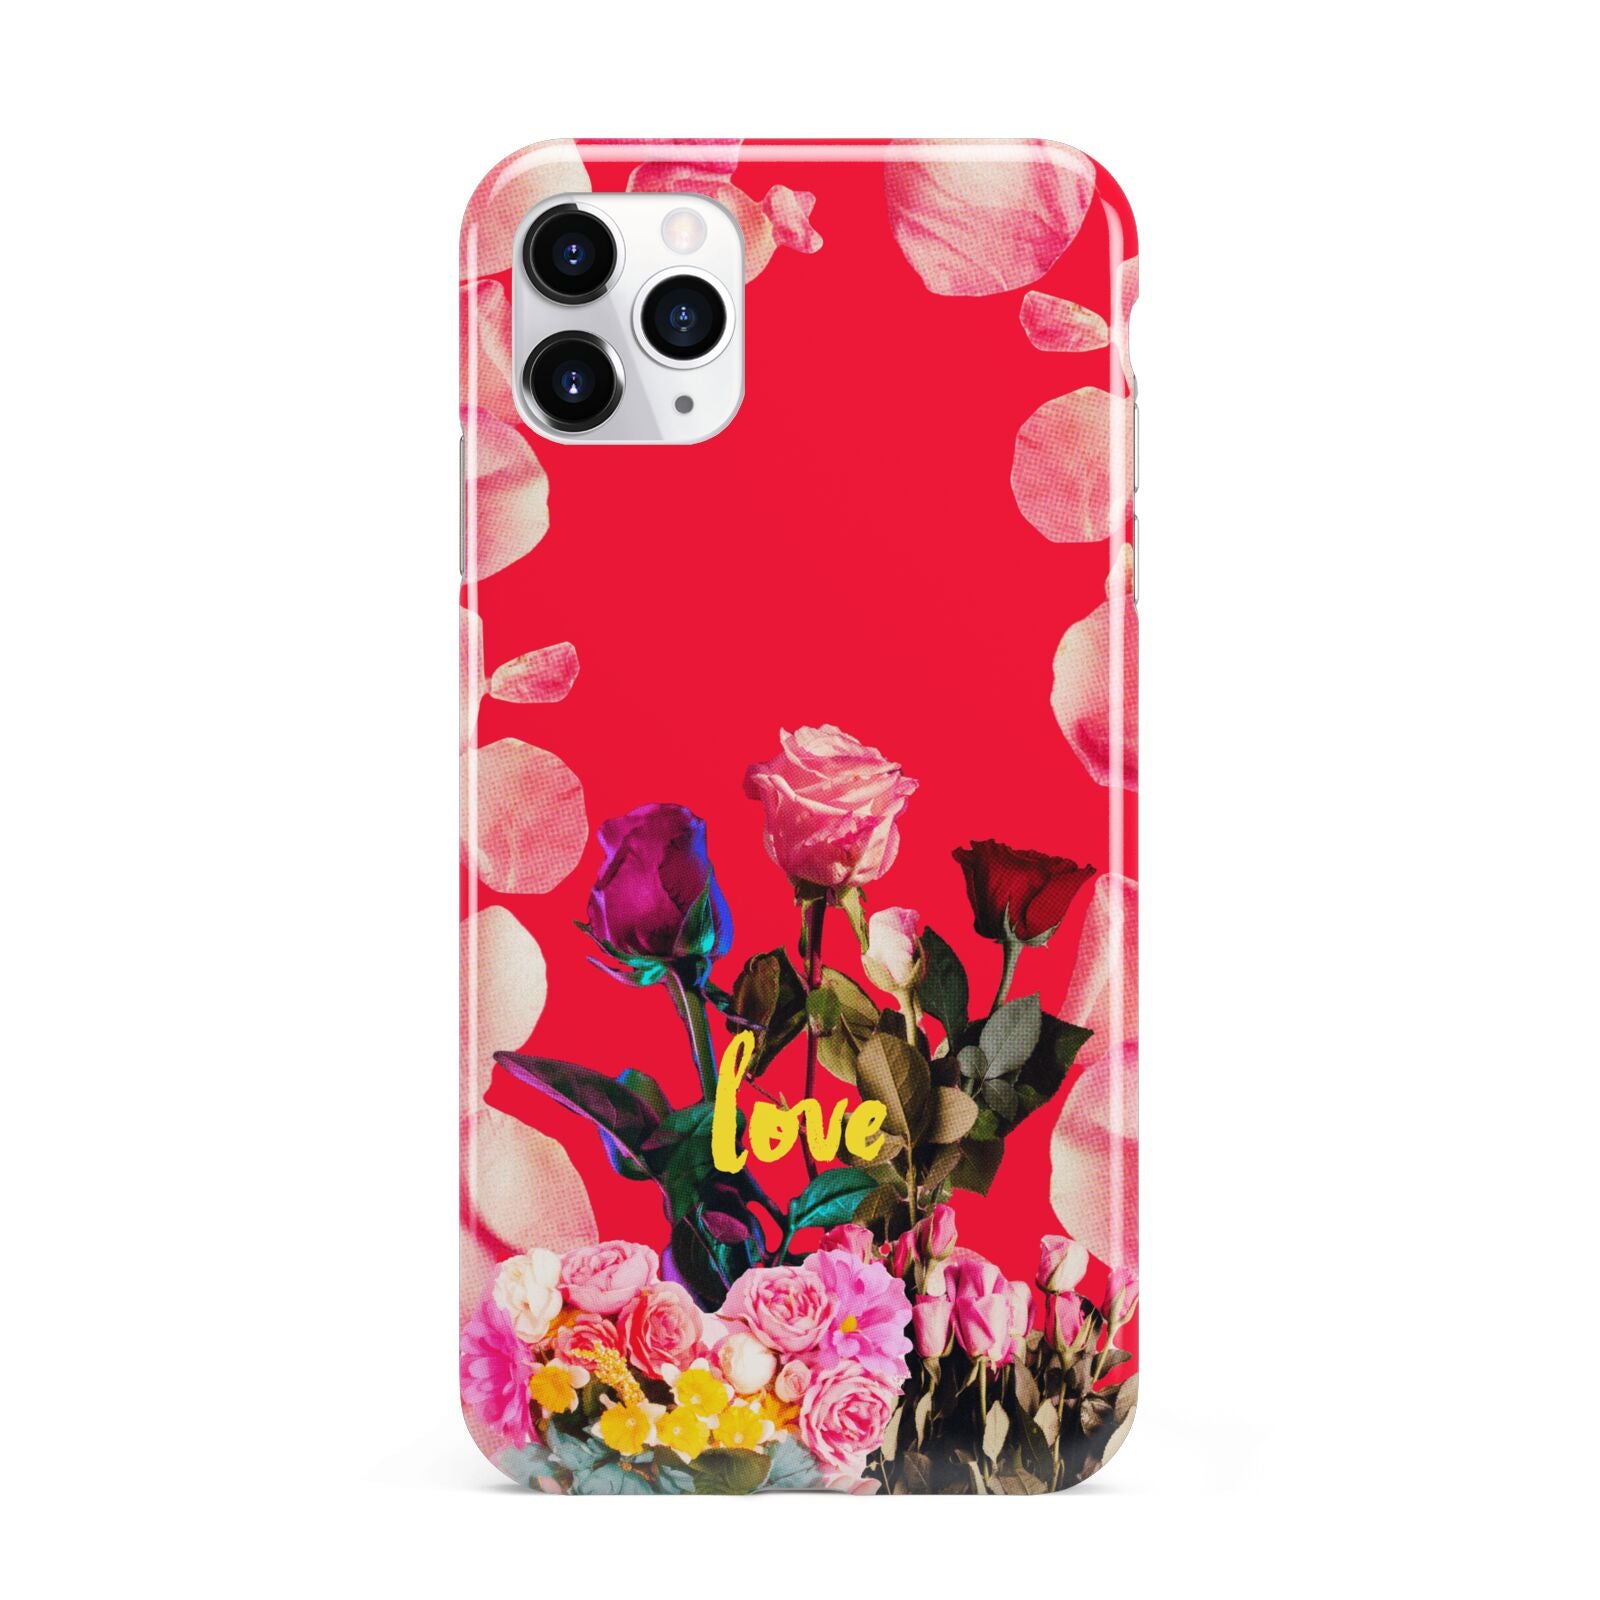 Retro Floral Valentine iPhone 11 Pro Max 3D Tough Case